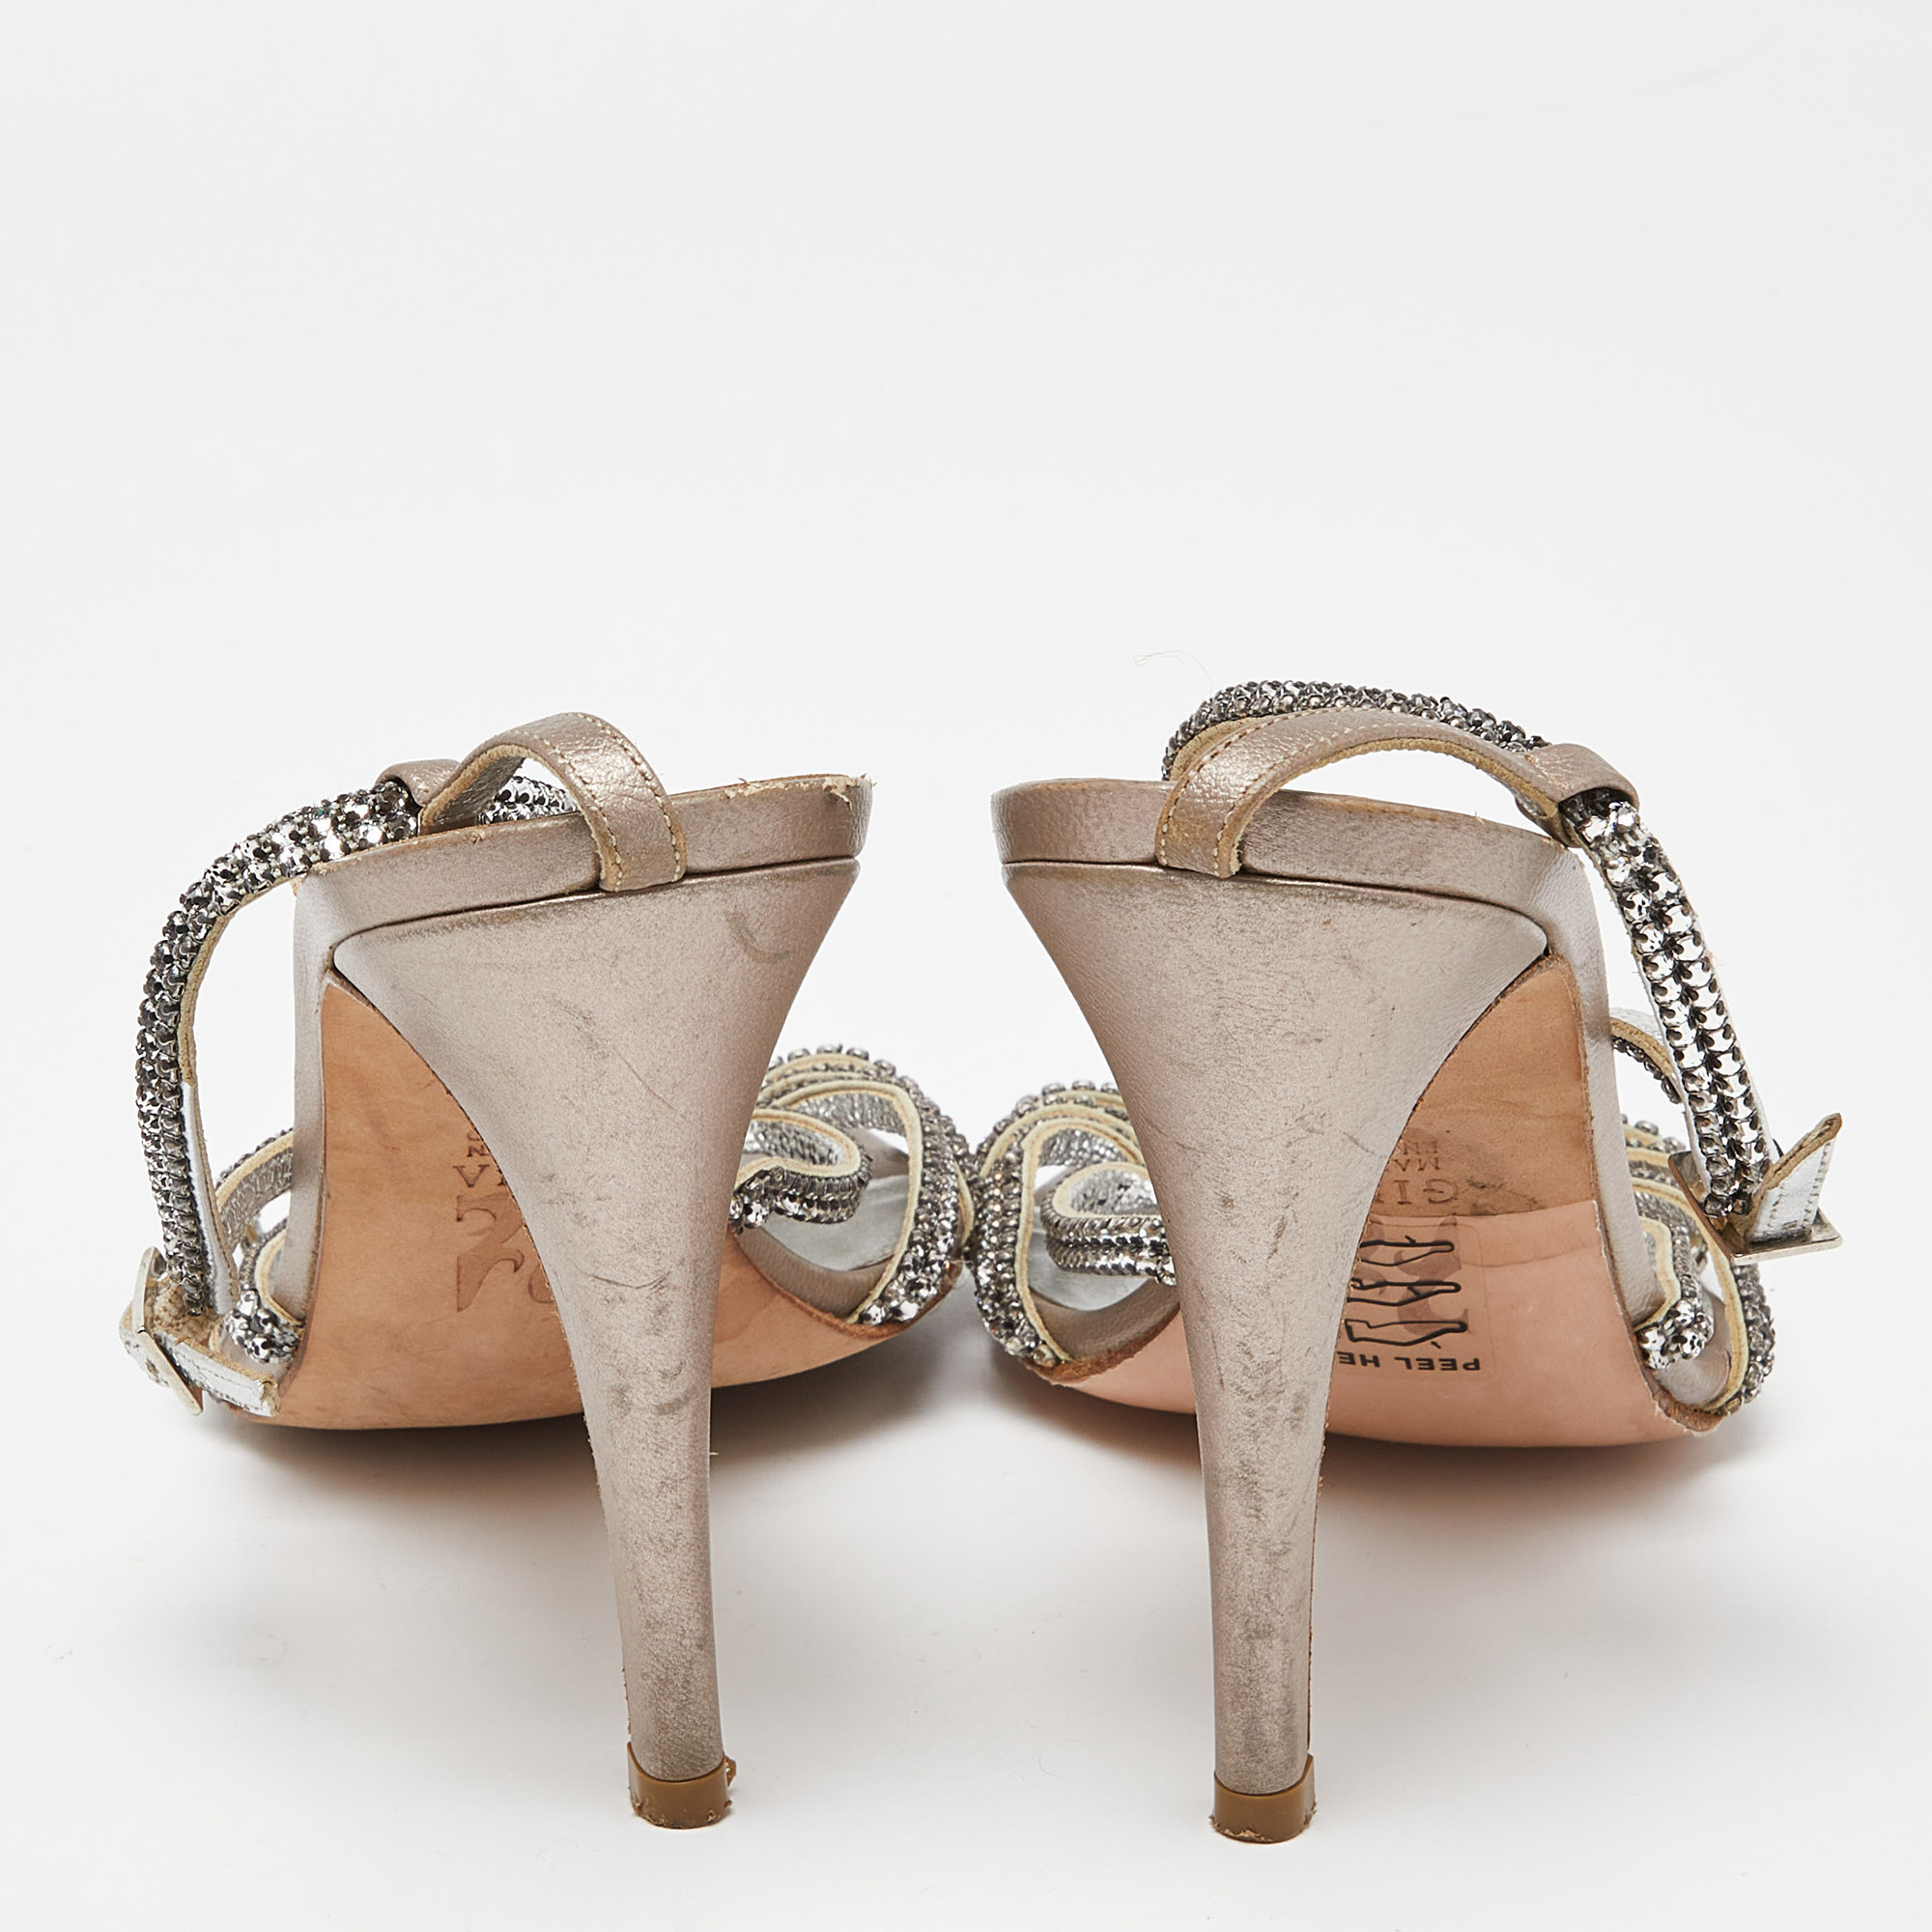 Gina Silver Crystal Embellished Leather T-Bar Ankle Strap Sandals Size 40